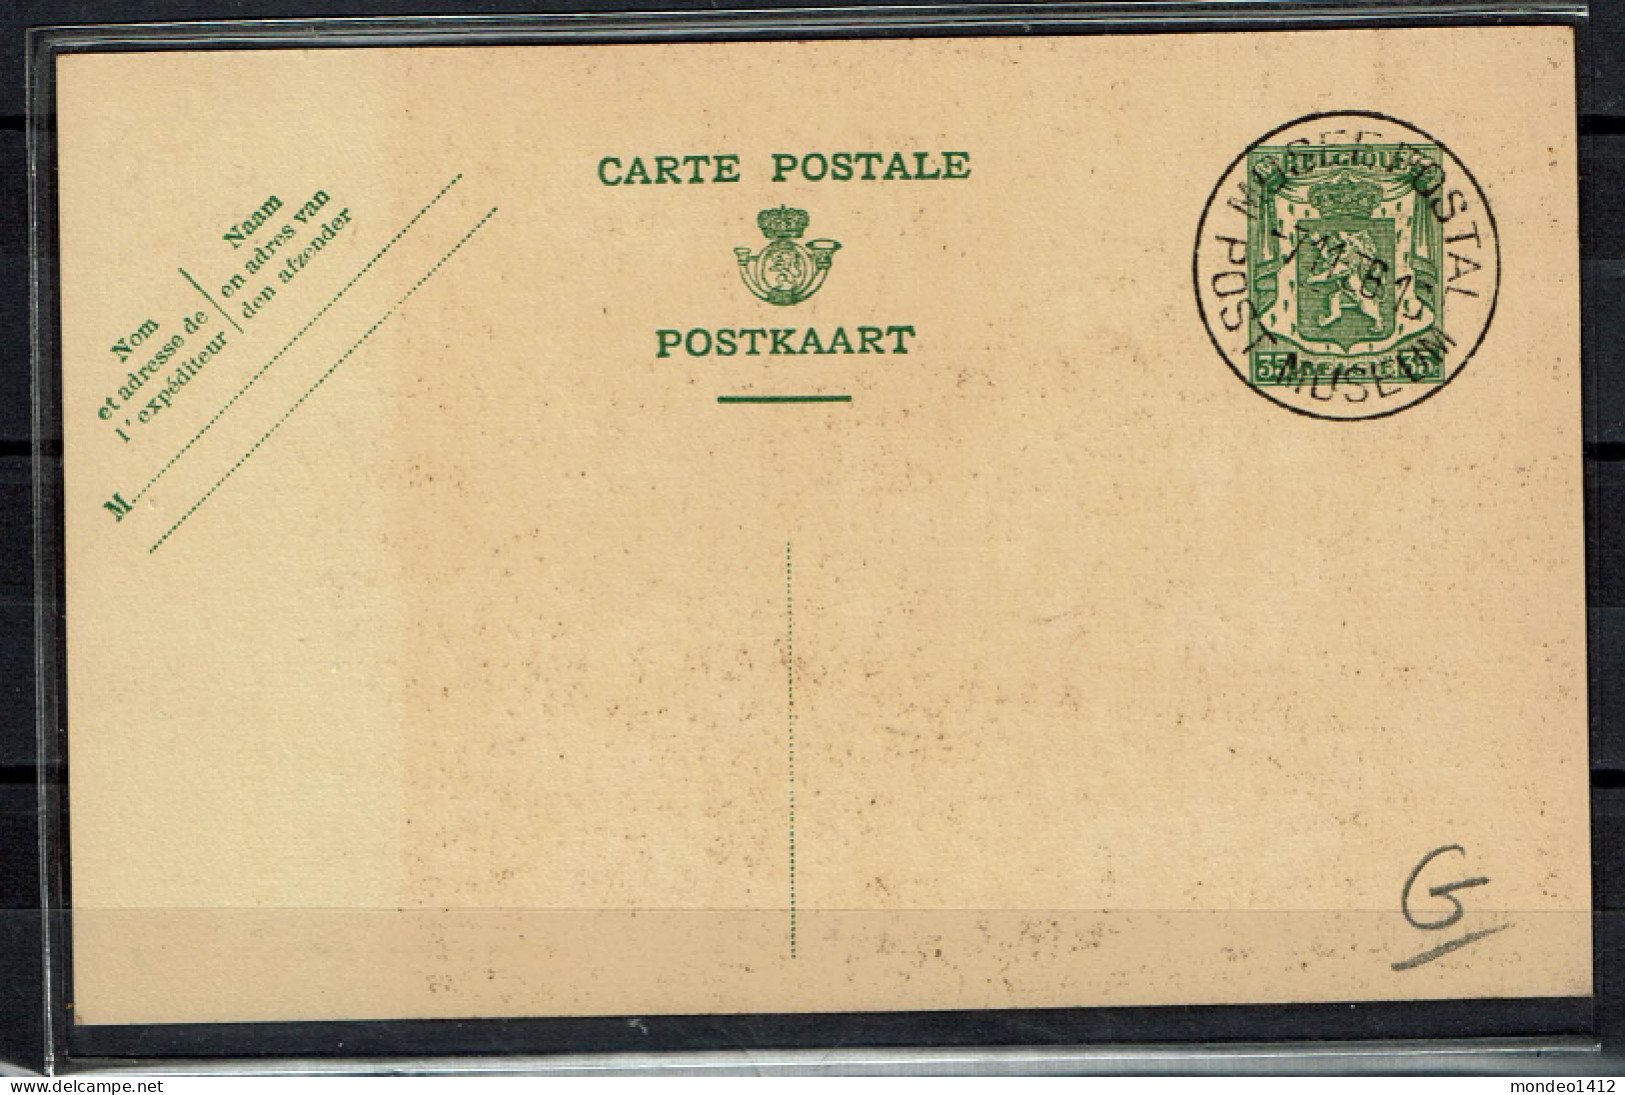 Belgique Entier Postal - Carte De Bruxelles - Musée Postal - Briefkaarten 1934-1951